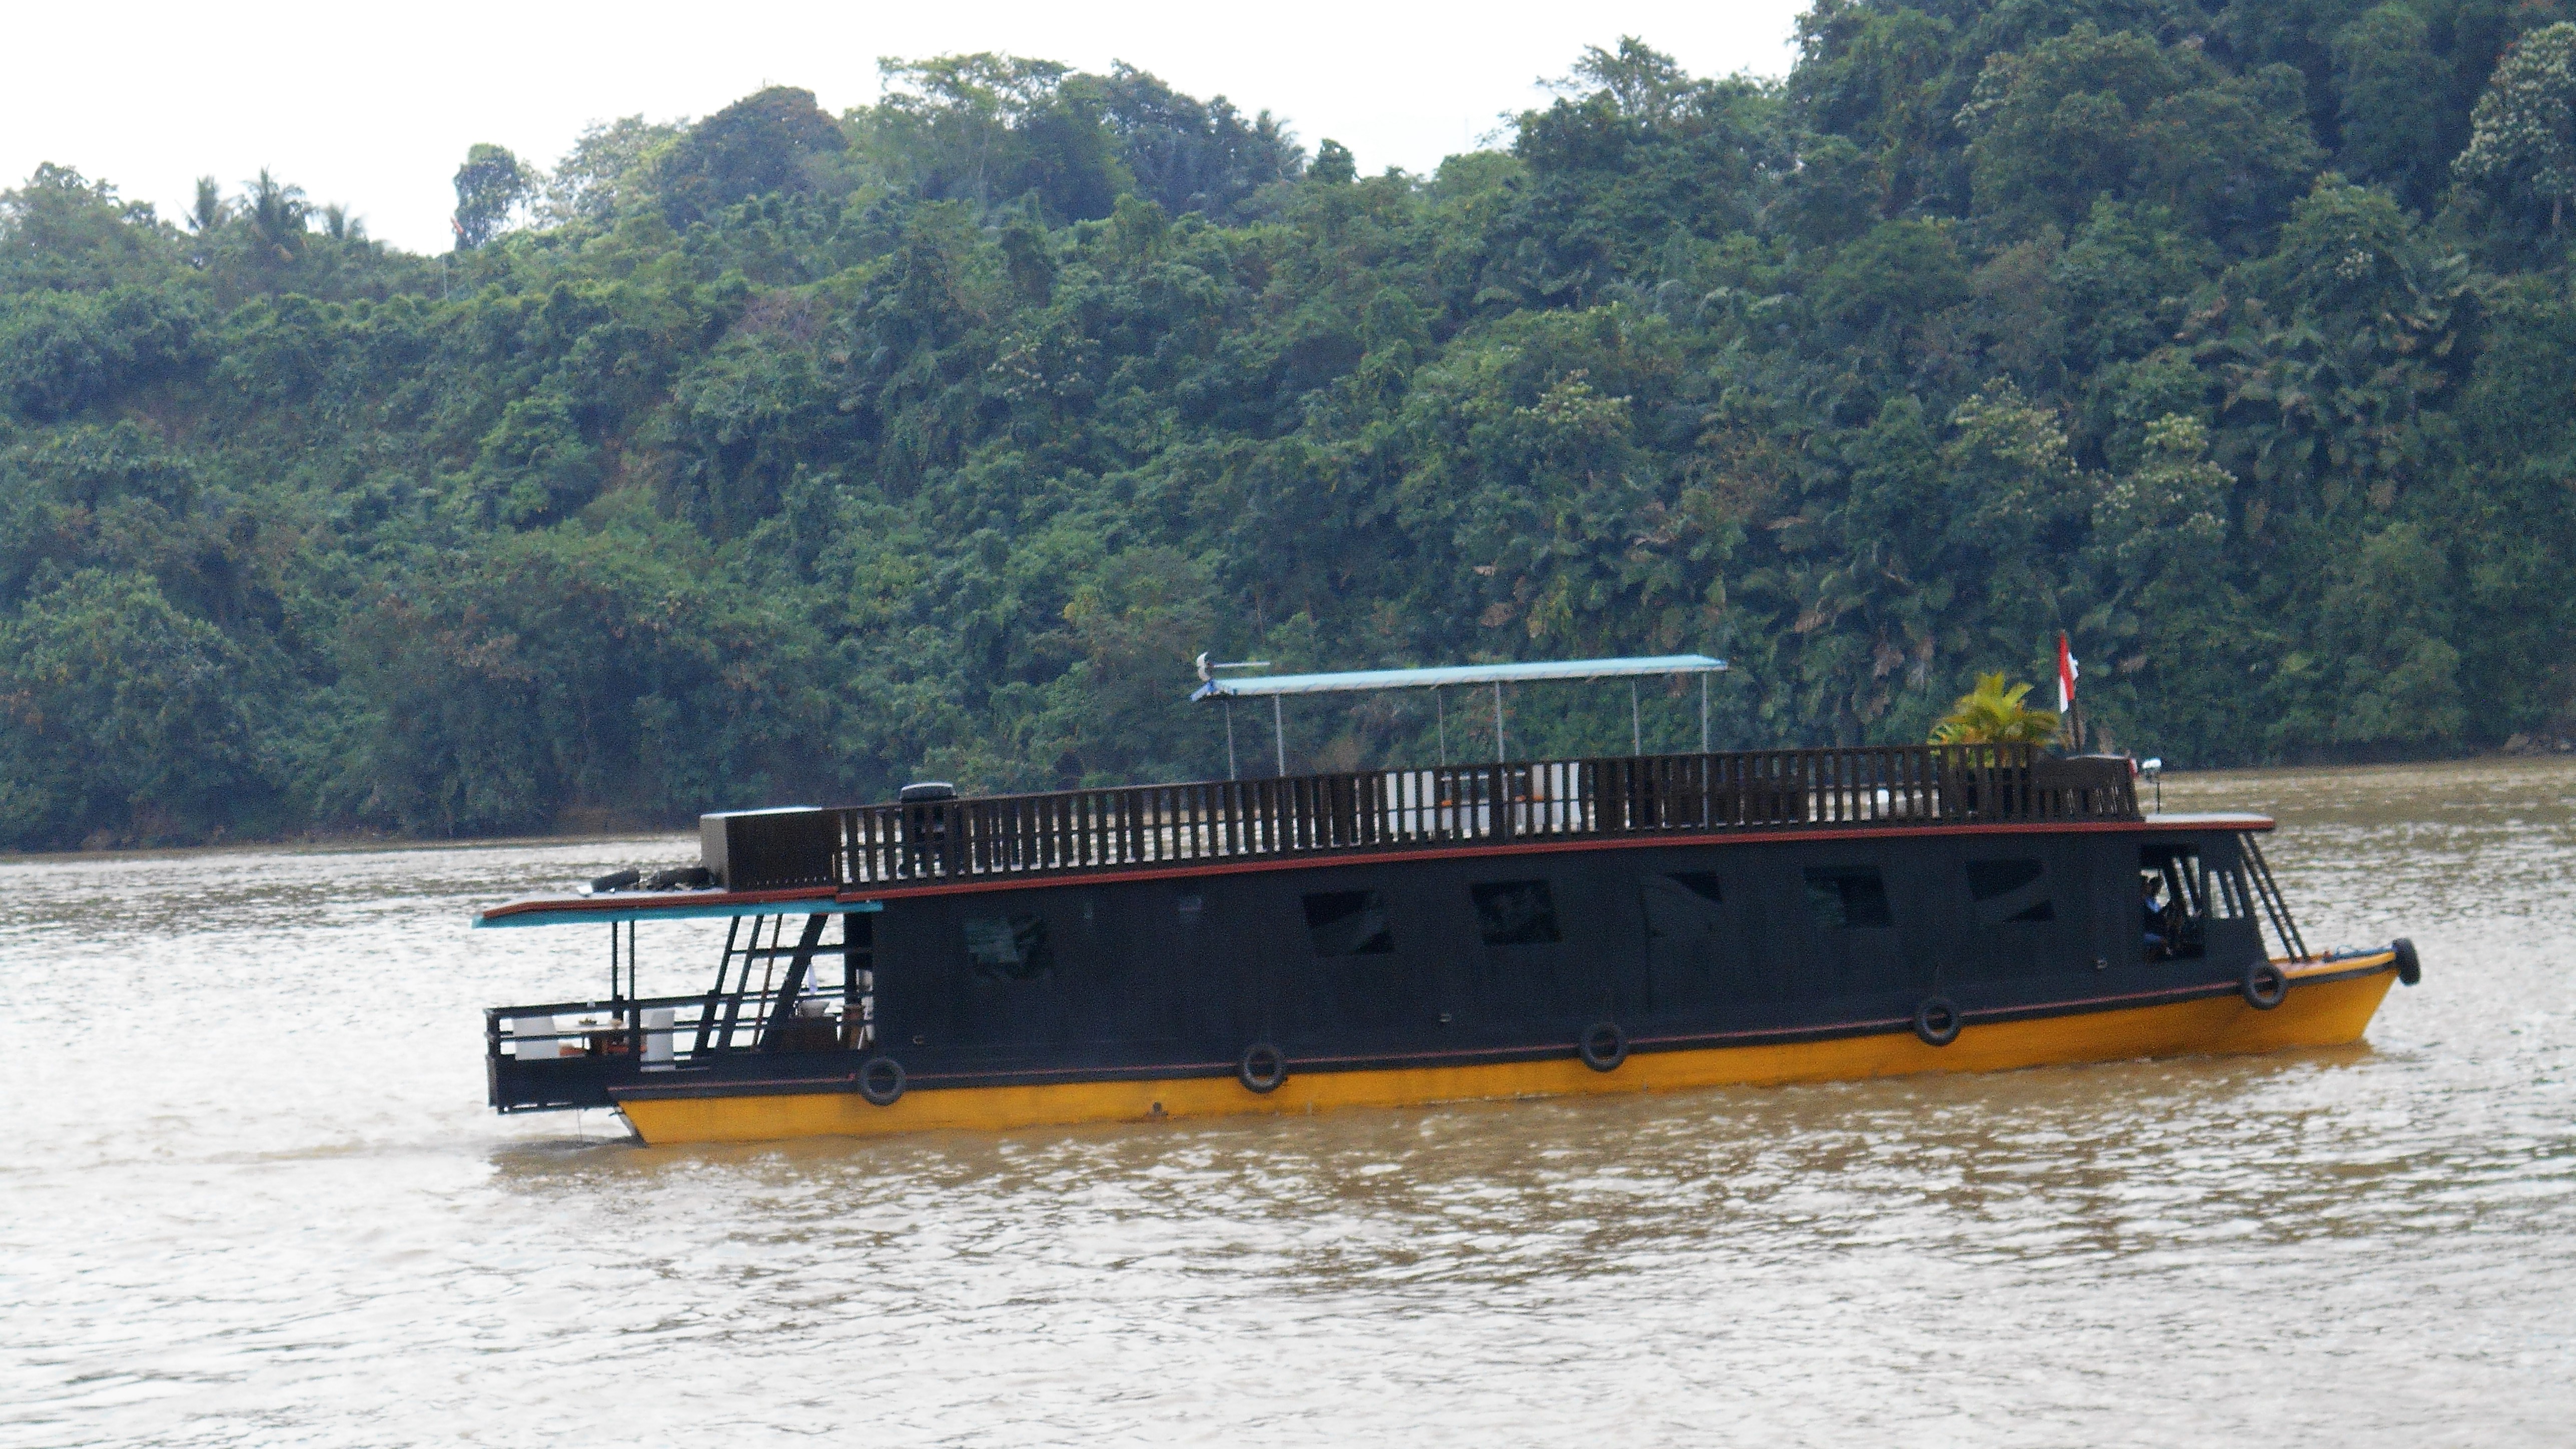 mahakam river, cruise, tour, trip, guide, houseboat, borneo, kalimantan, jungle, dayak, culture, wildlife, rain forest